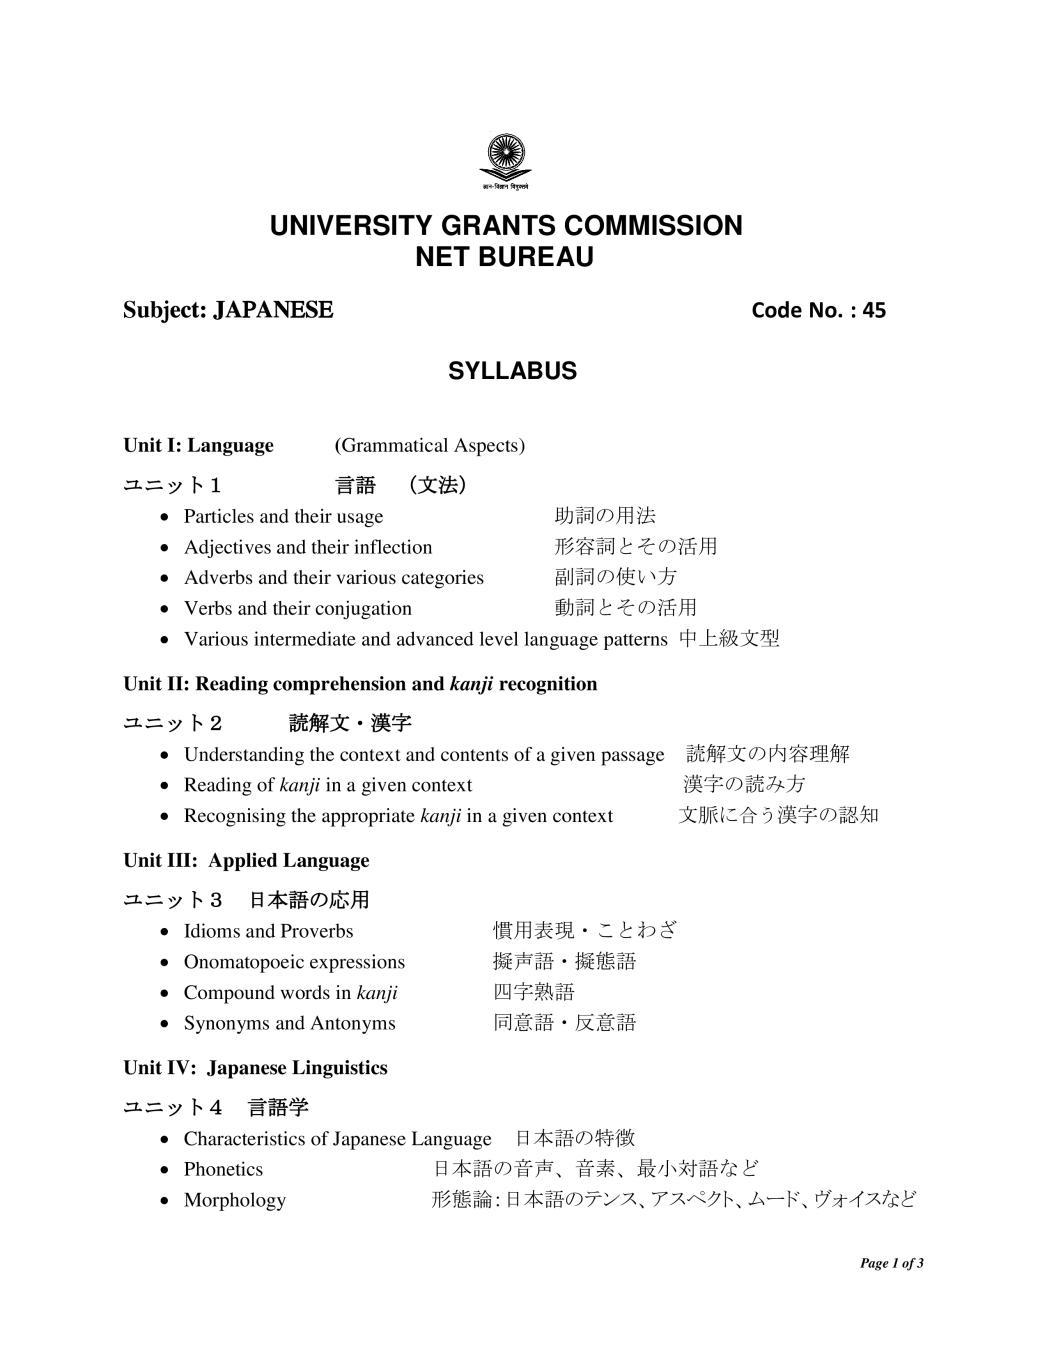 UGC NET Syllabus for Japenese 2020 - Page 1